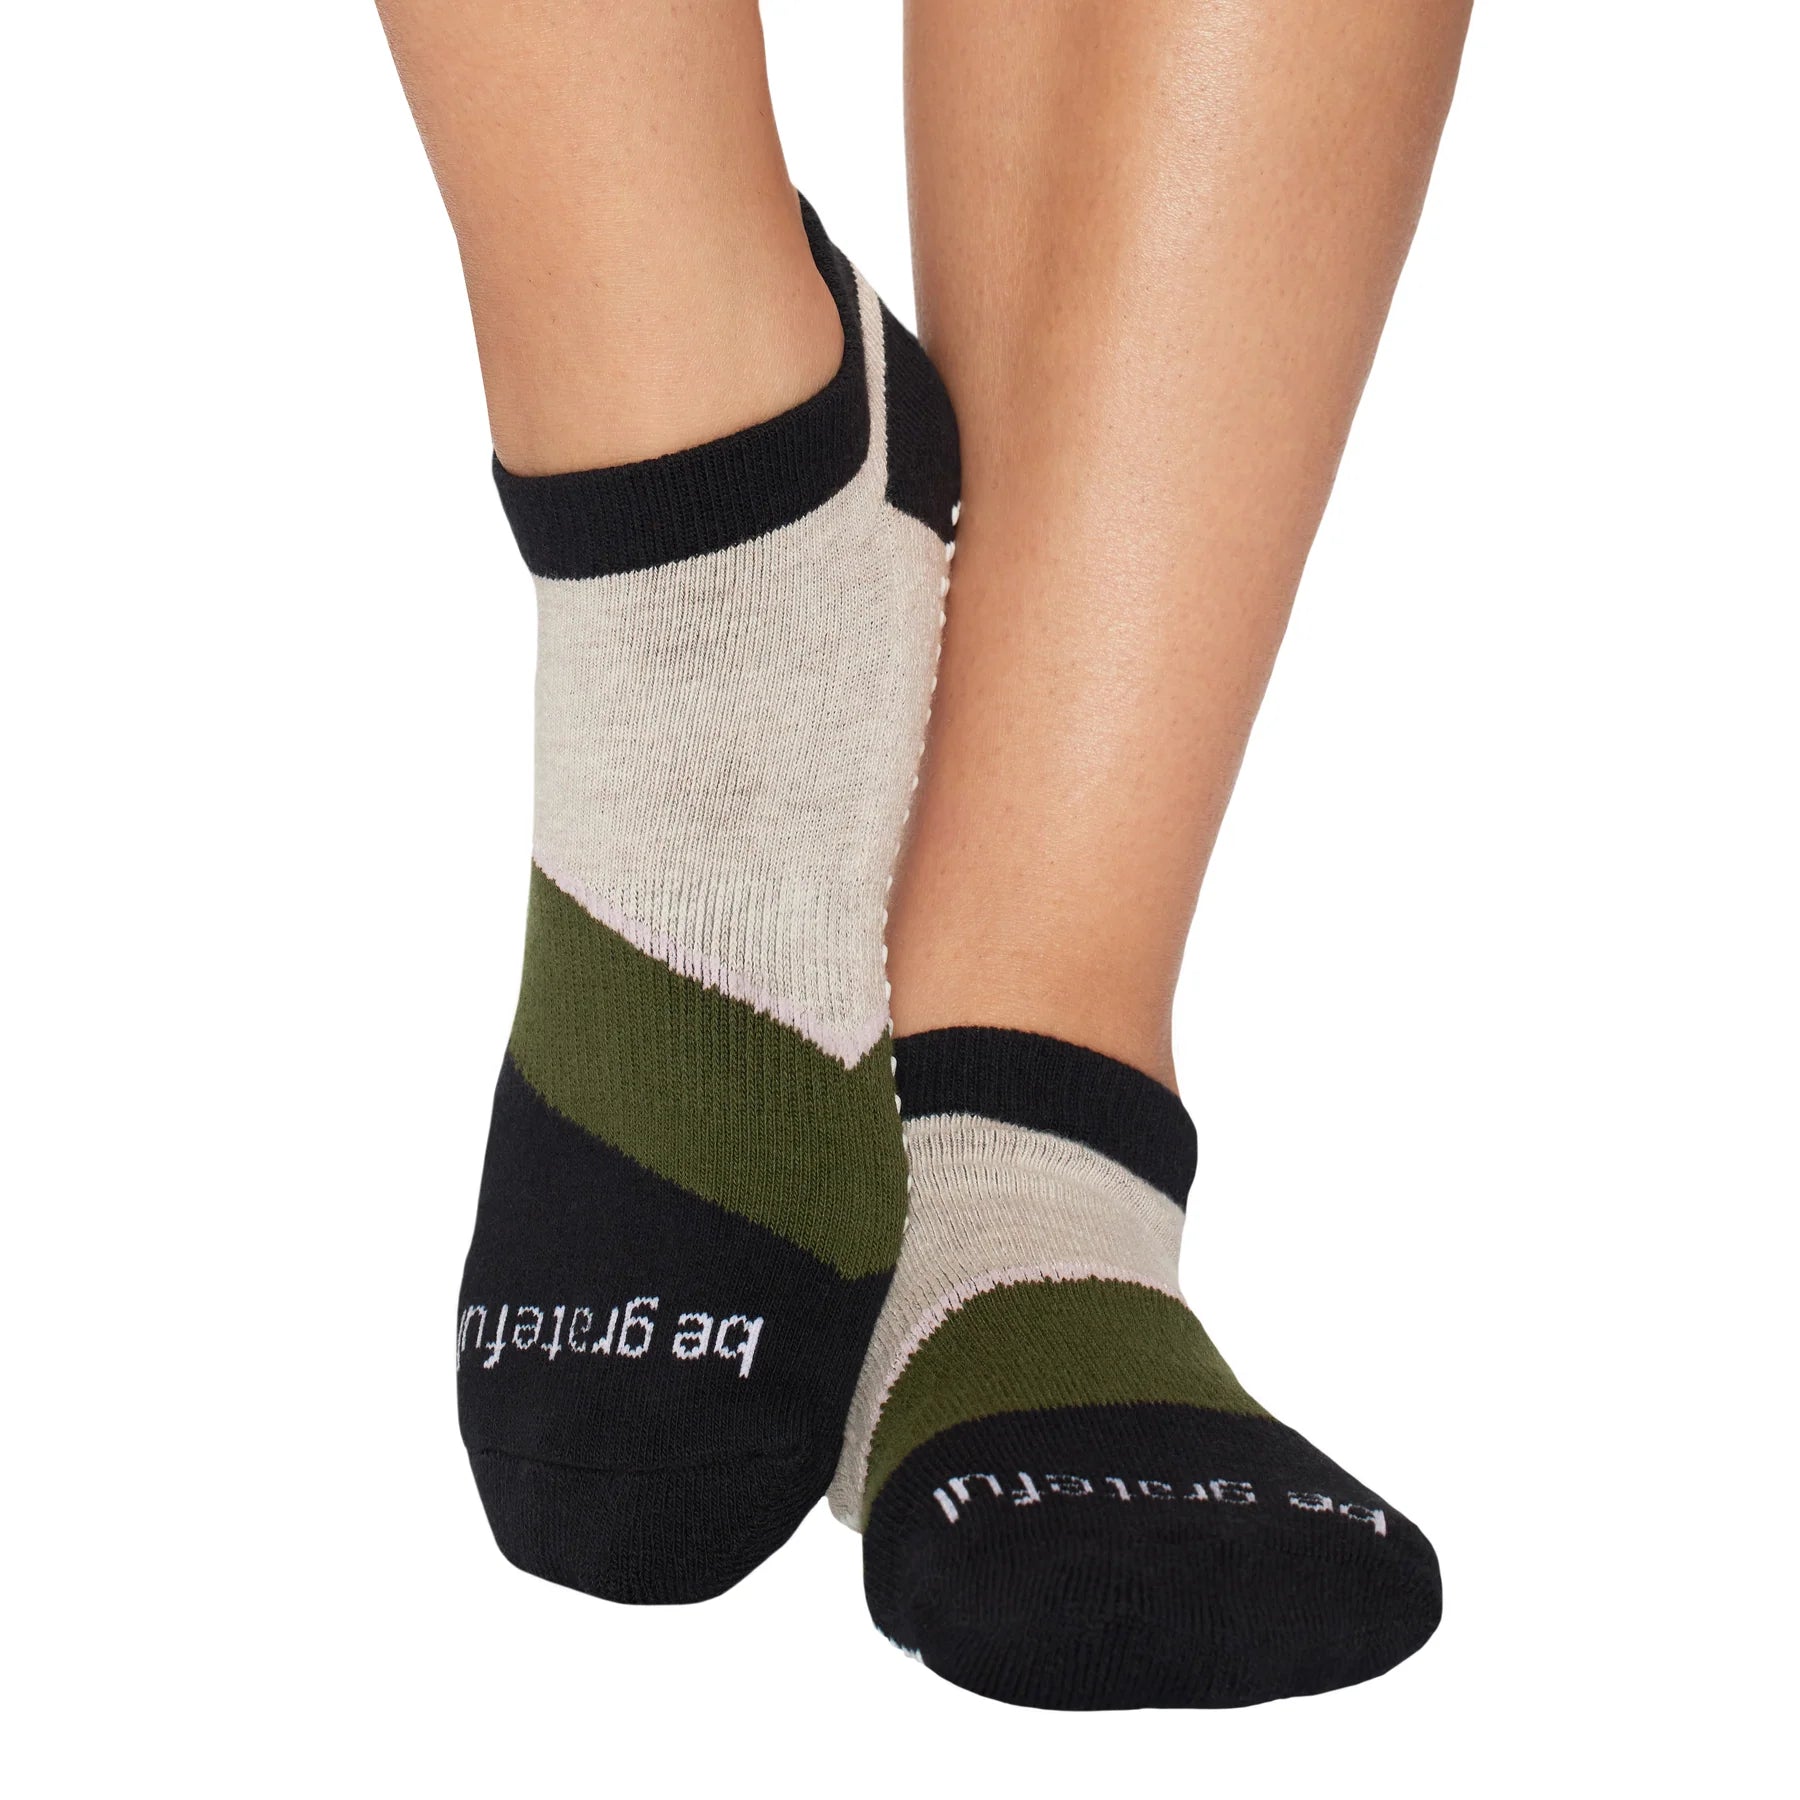 Pretzel Crew Grip Socks - simplyWORKOUT Black / One Size (6-10)